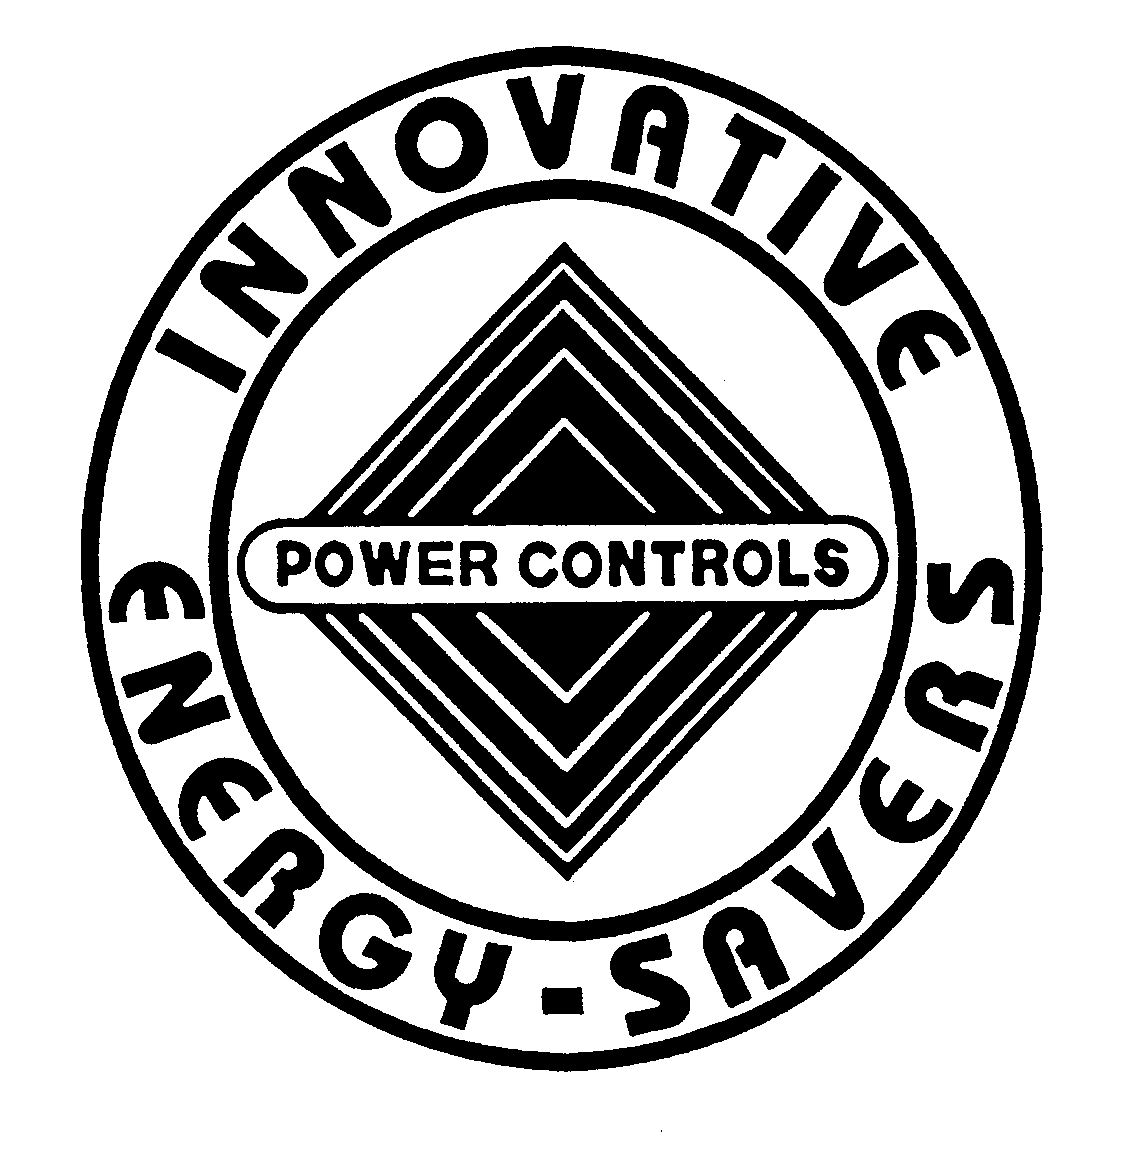  INNOVATIVE ENERGY-SAVERS POWER CONTROLS